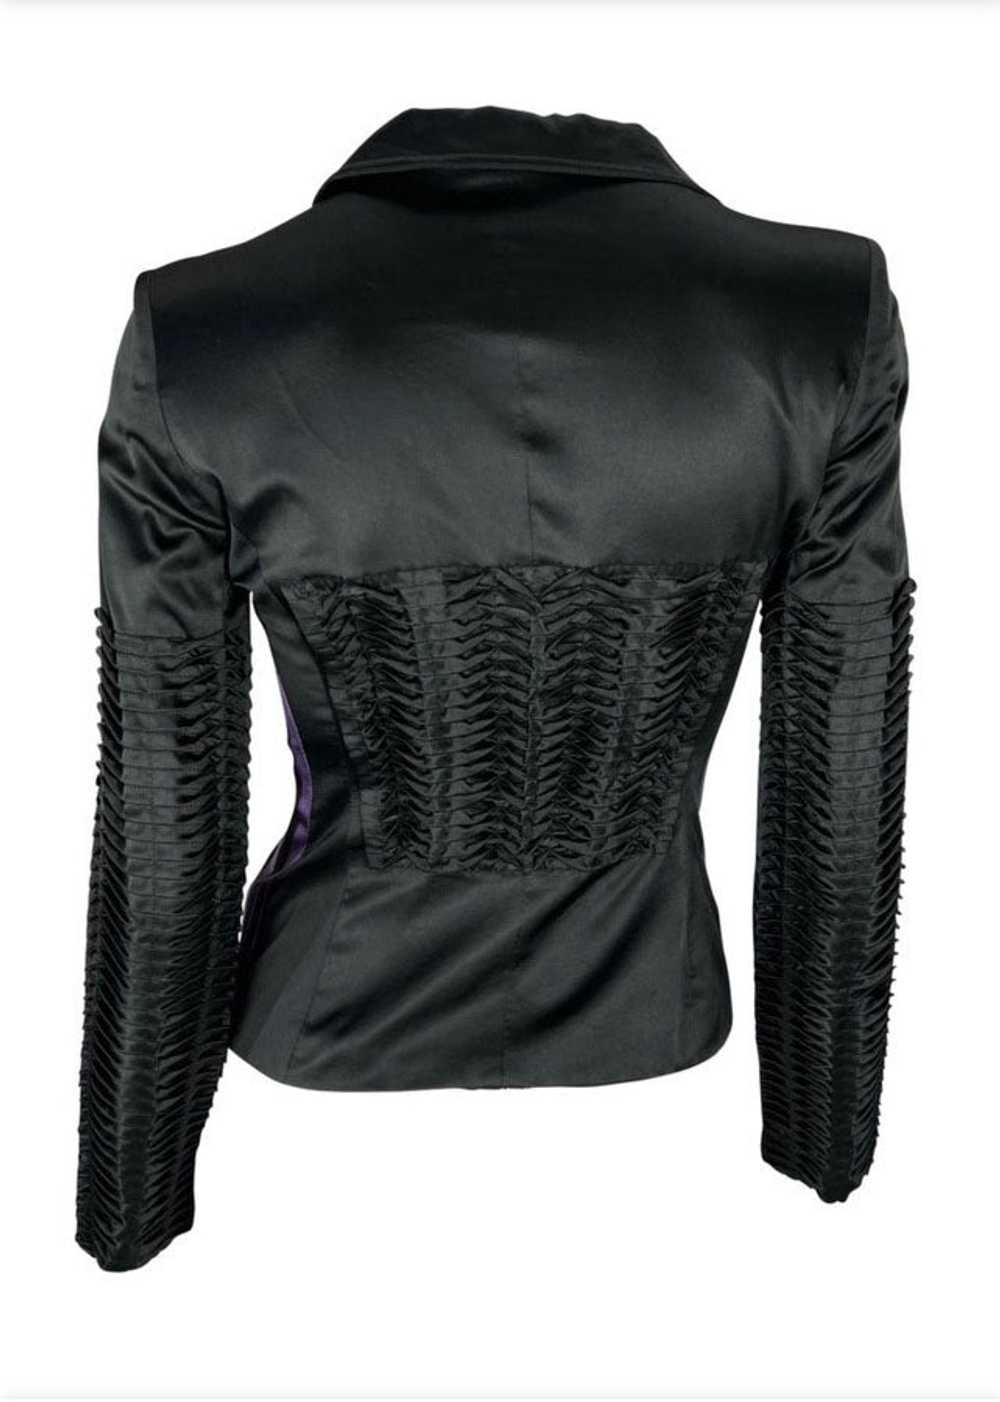 S/S 2004 GUCCI jacket corset - image 6